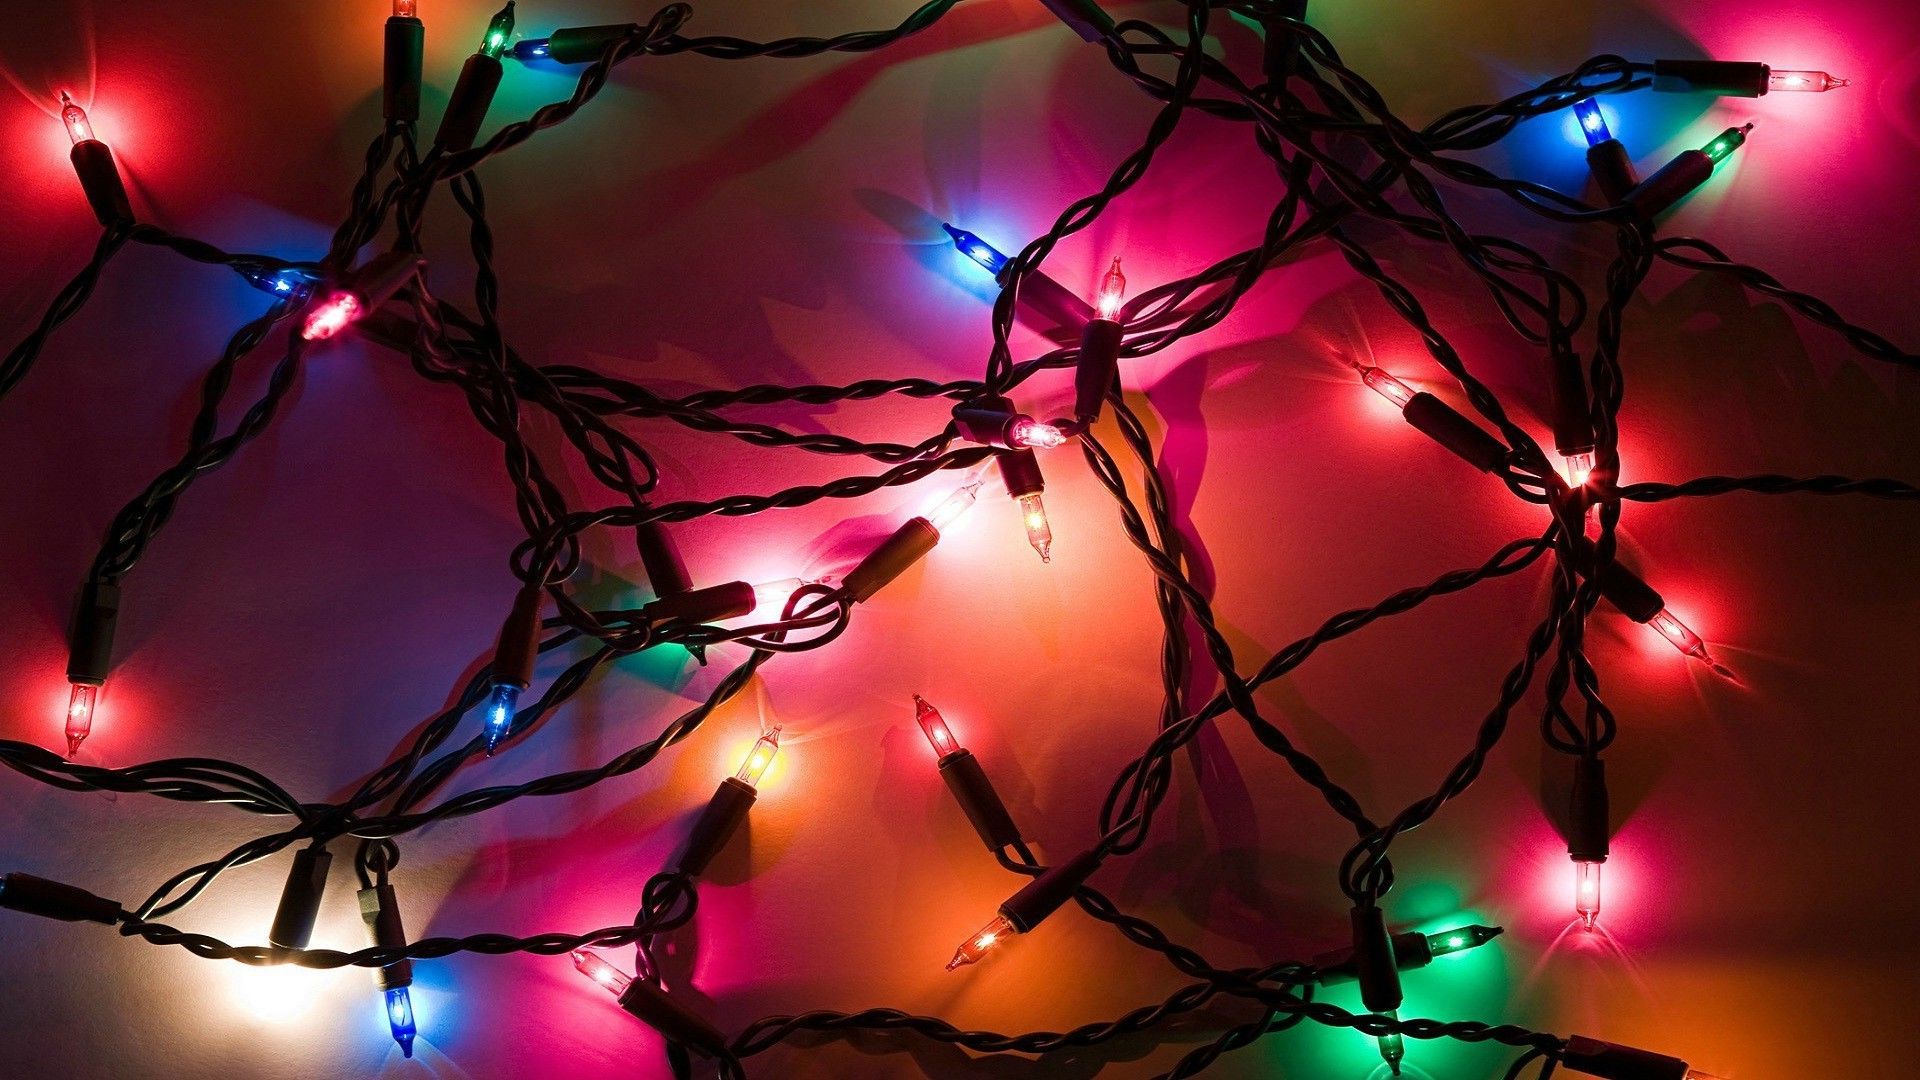 A close up of some colorful christmas lights - Christmas lights